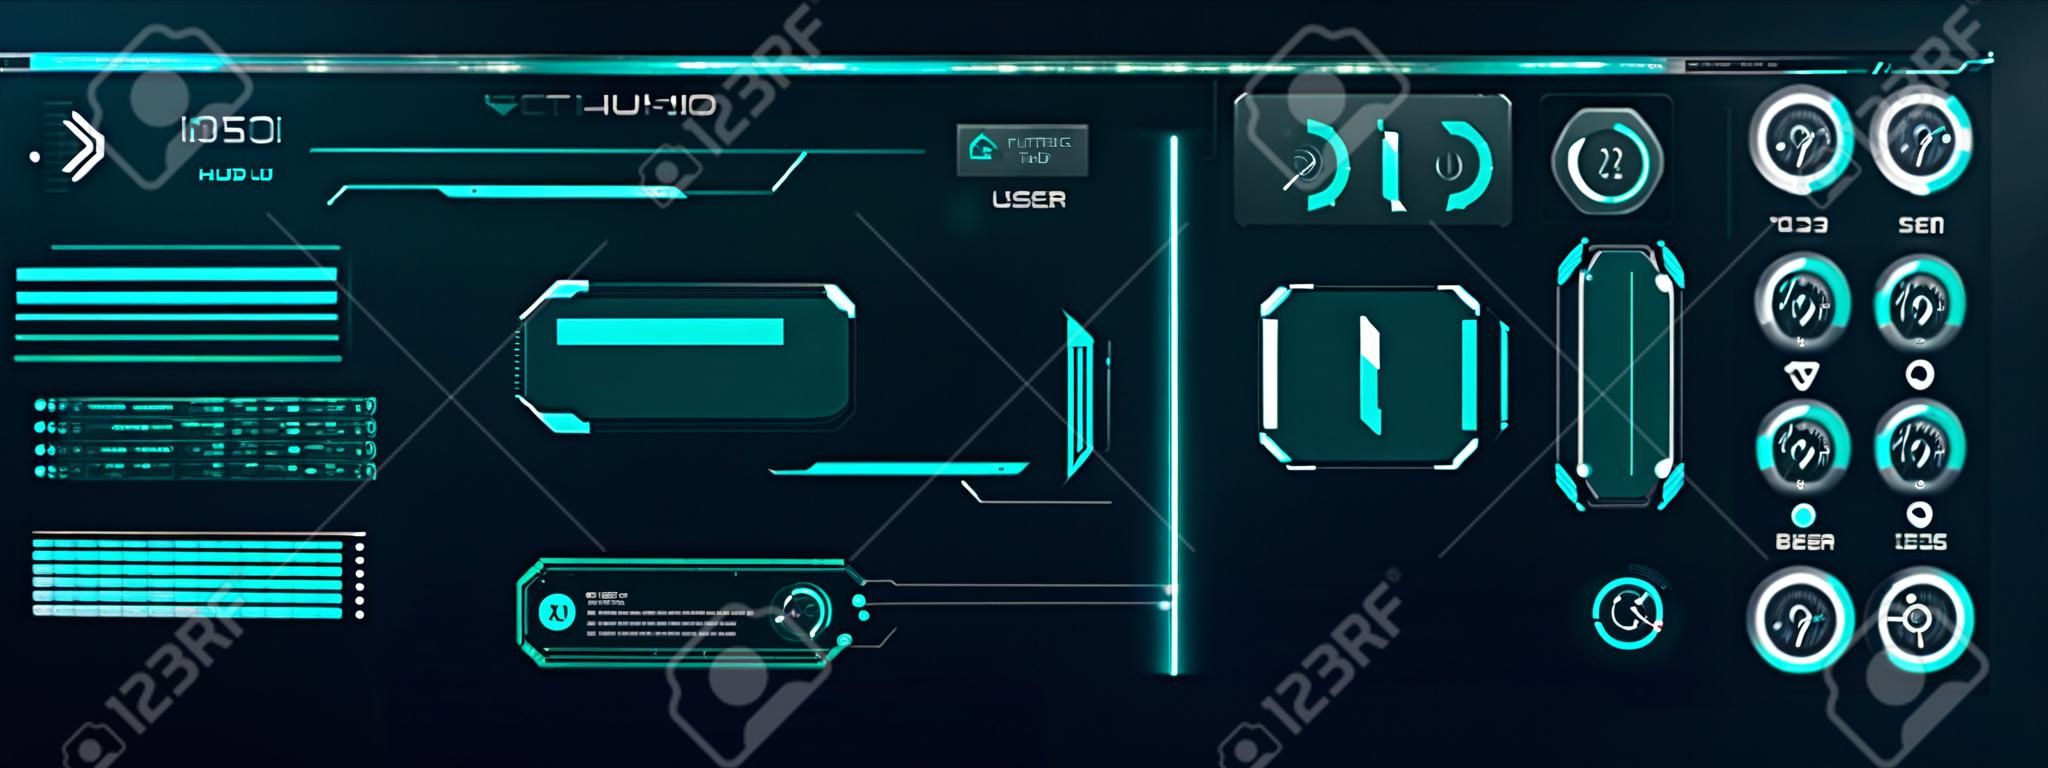 Futuristic Vector HUD Interface Screen Design. Digital callouts titles. HUD UI GUI futuristic user interface screen elements set. High tech screen for video game. Sci-fi concept design.